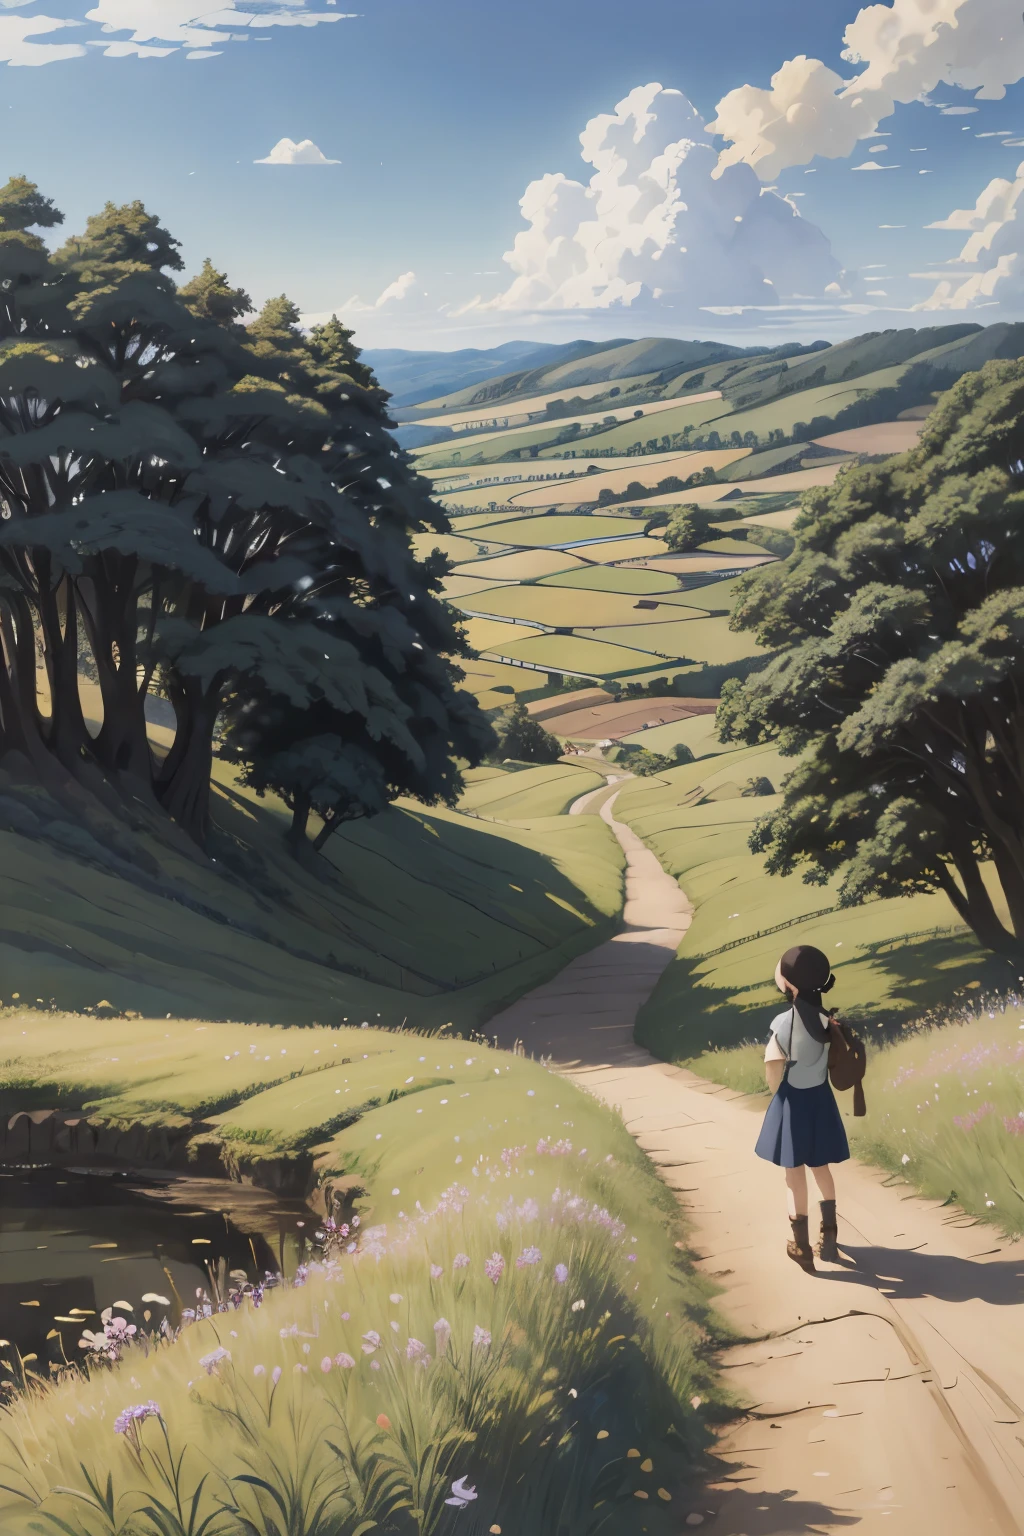 Realistic, real, beautiful and stunning landscape oil painting Studio Ghibli Hayao Miyazaki Petals Grassland Blue Sky Grassland Country Road,building, beautiful girl